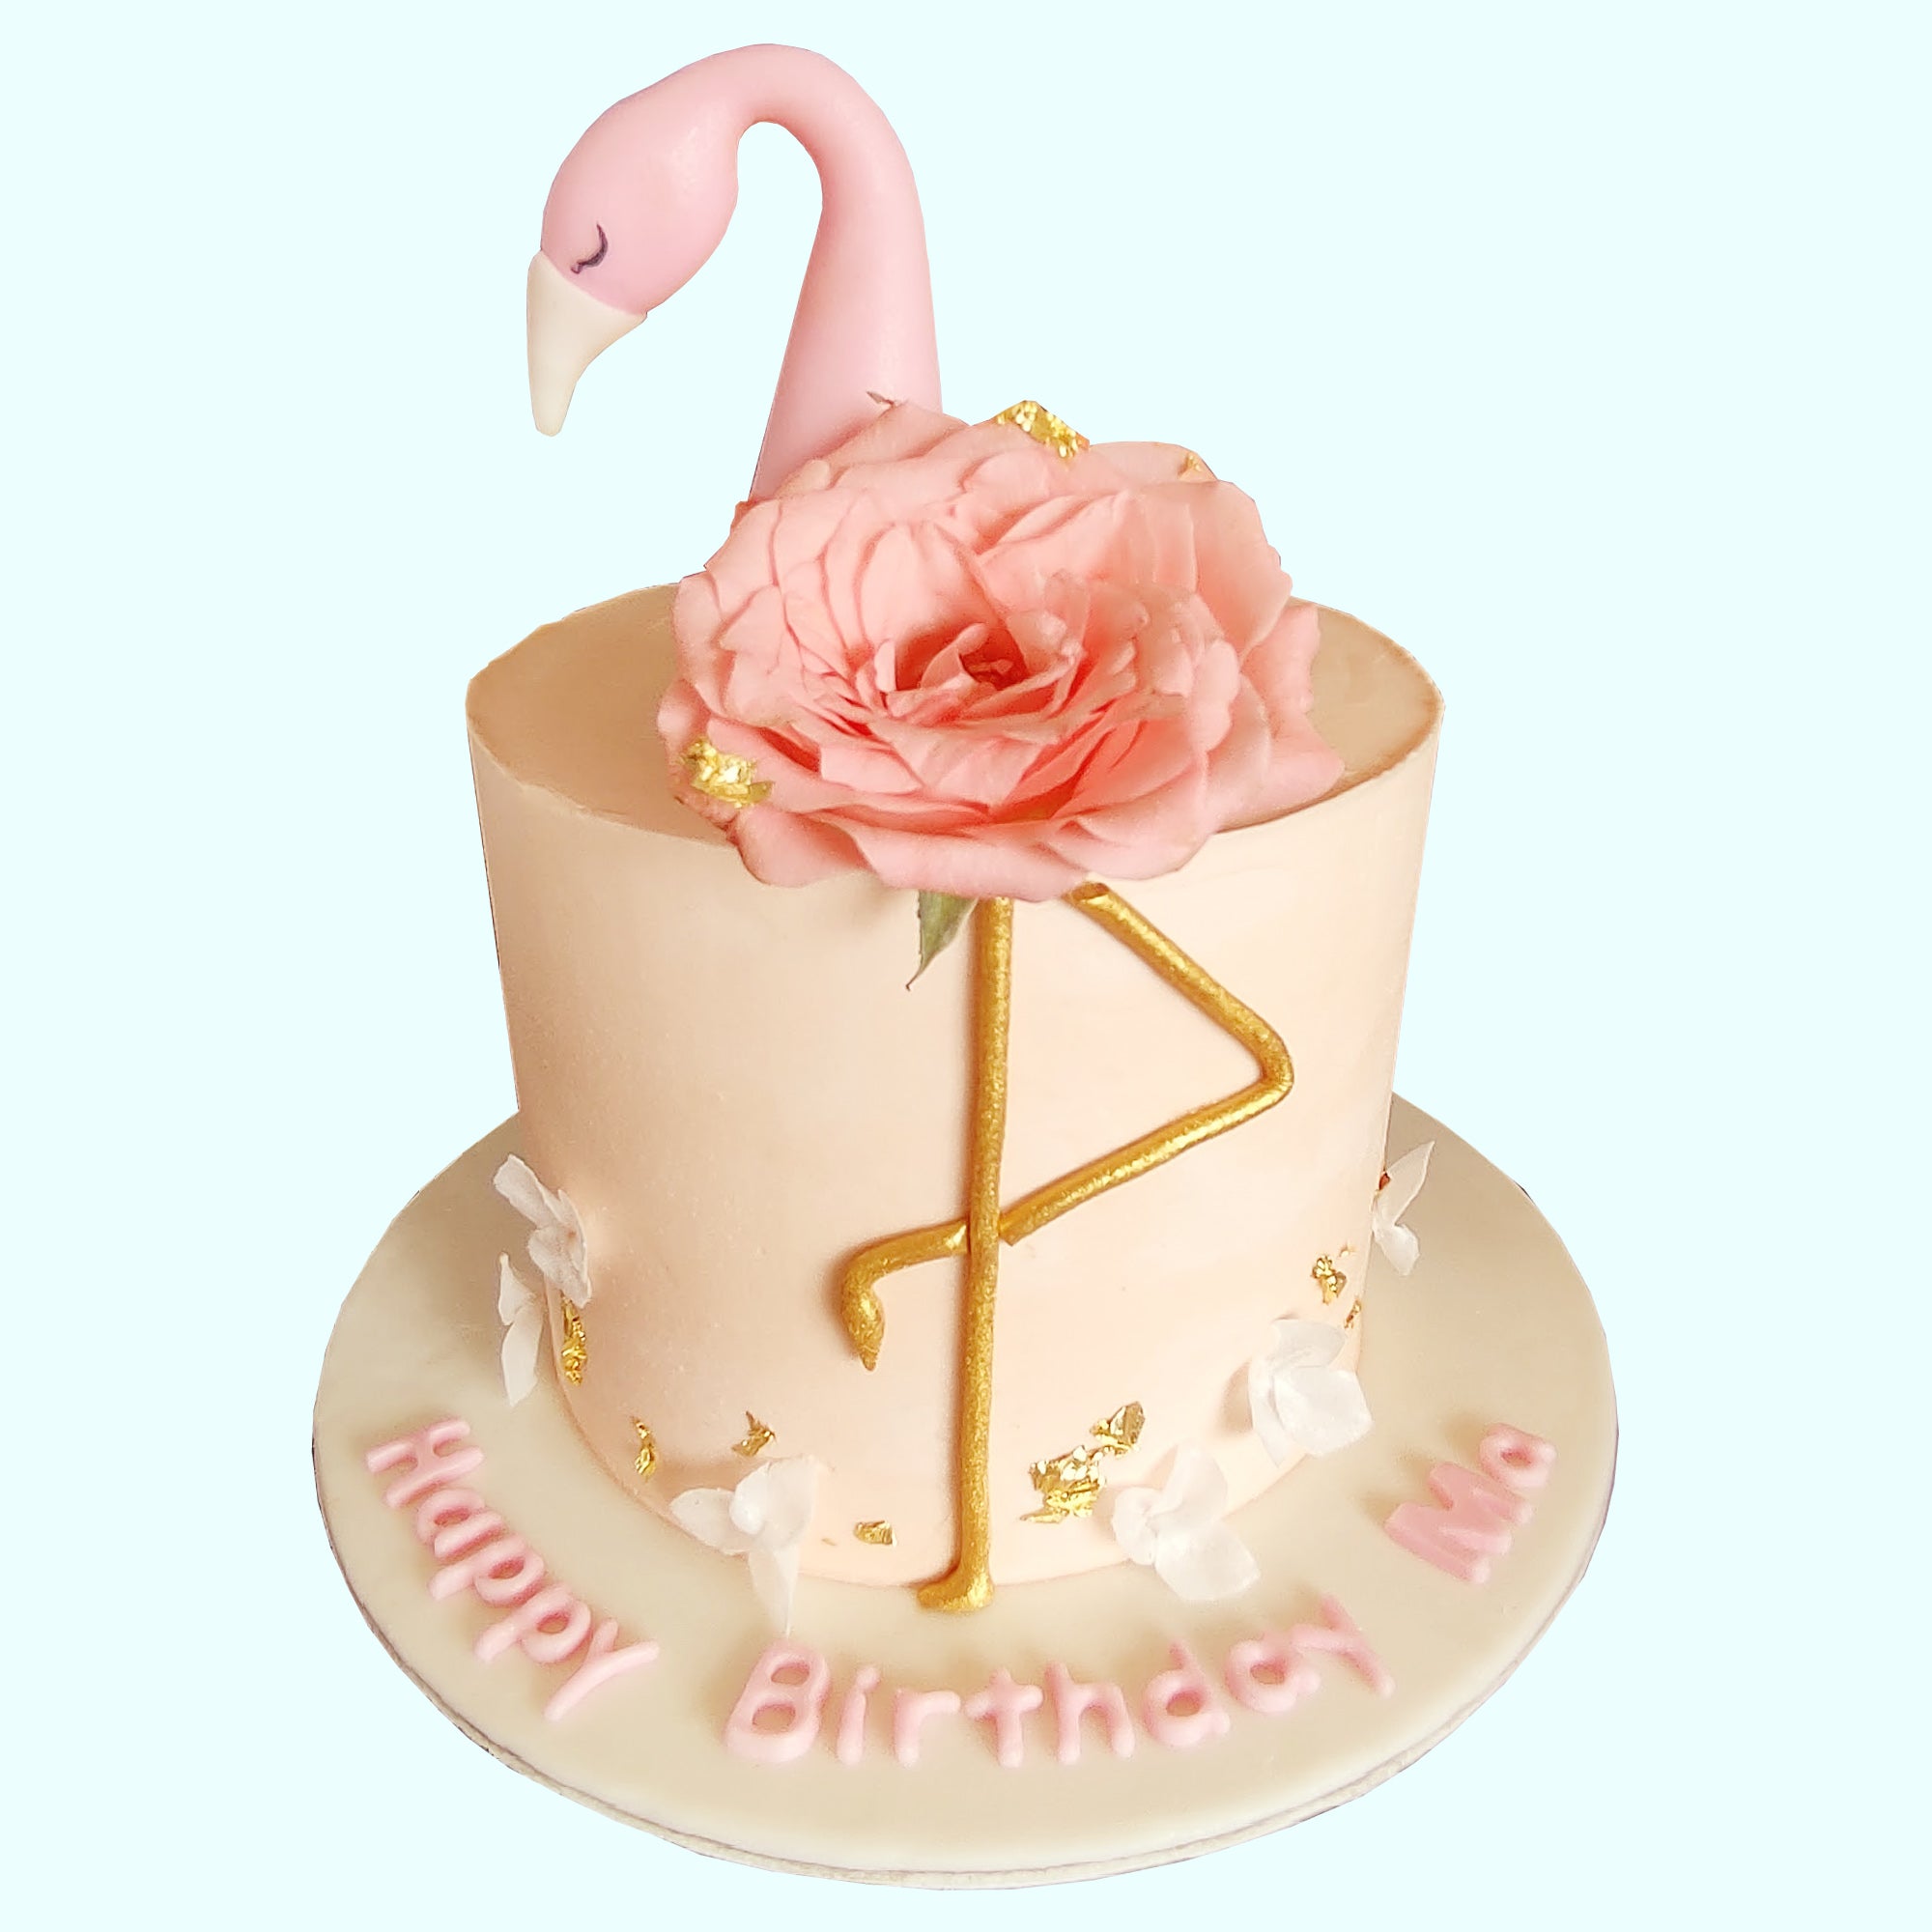 red rose birthday cake | Rosé birthday cake, Rosé birthday, Cake designs  birthday